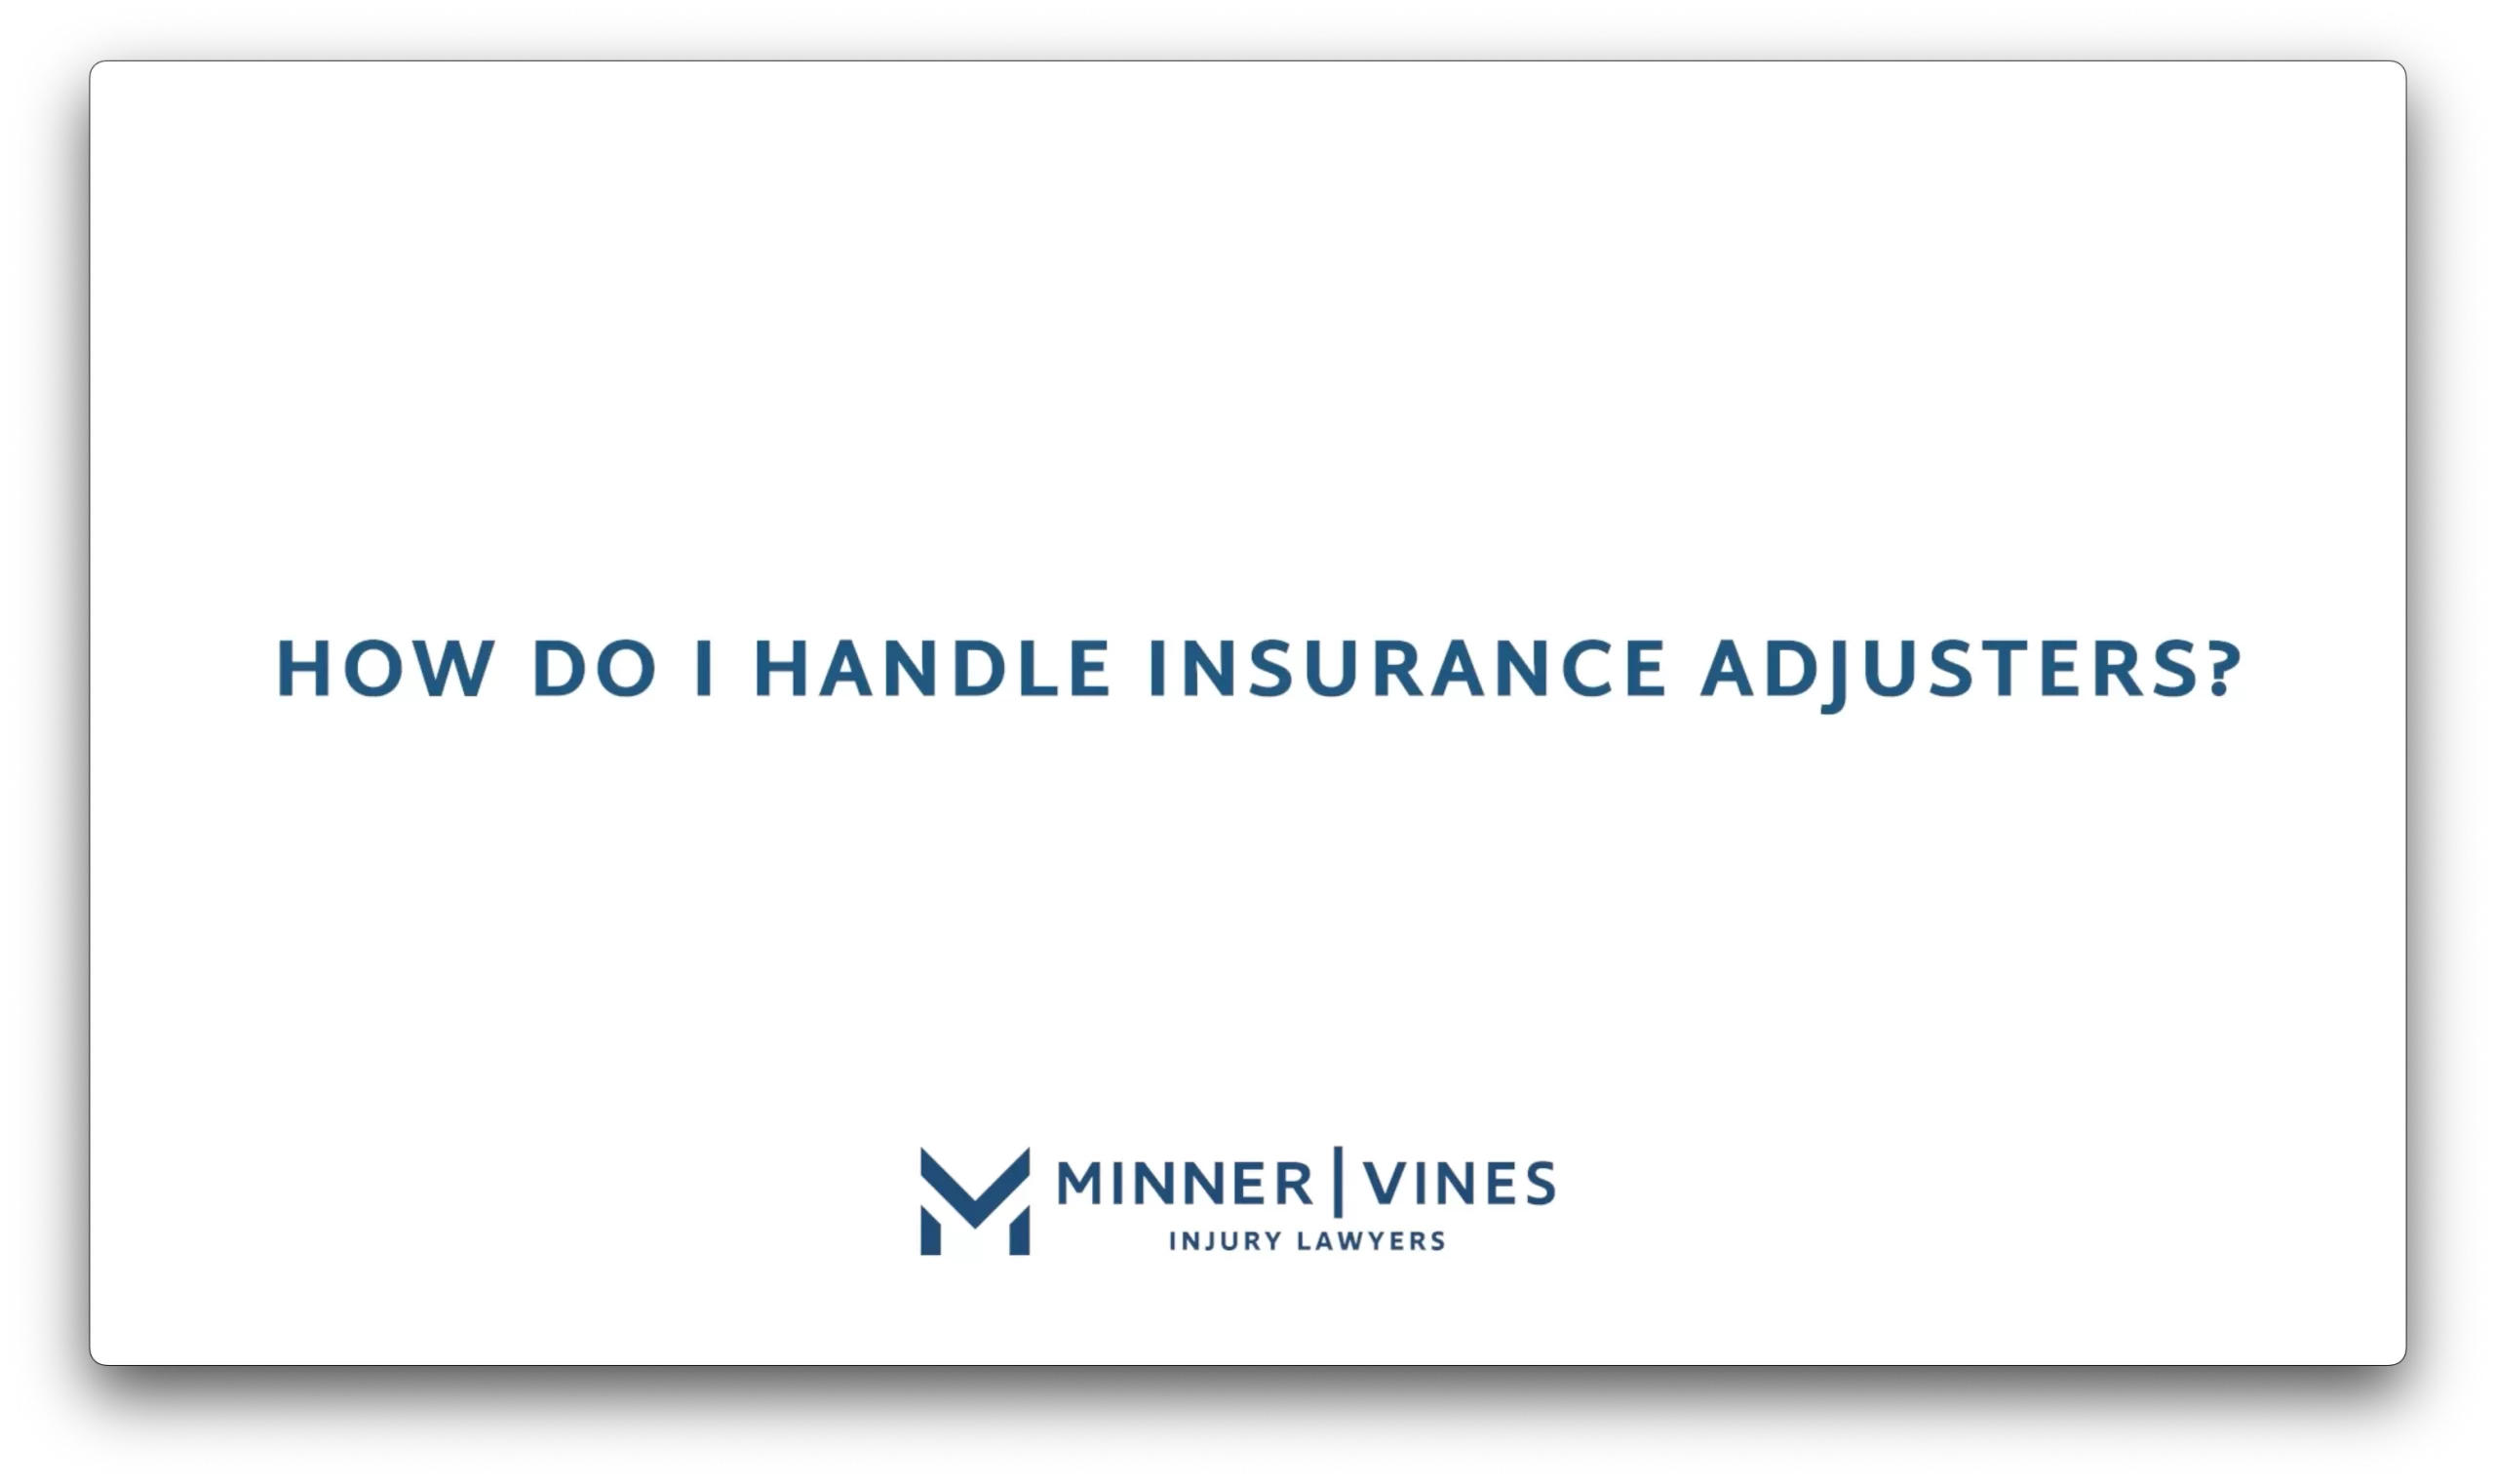 How do I handle insurance adjusters?